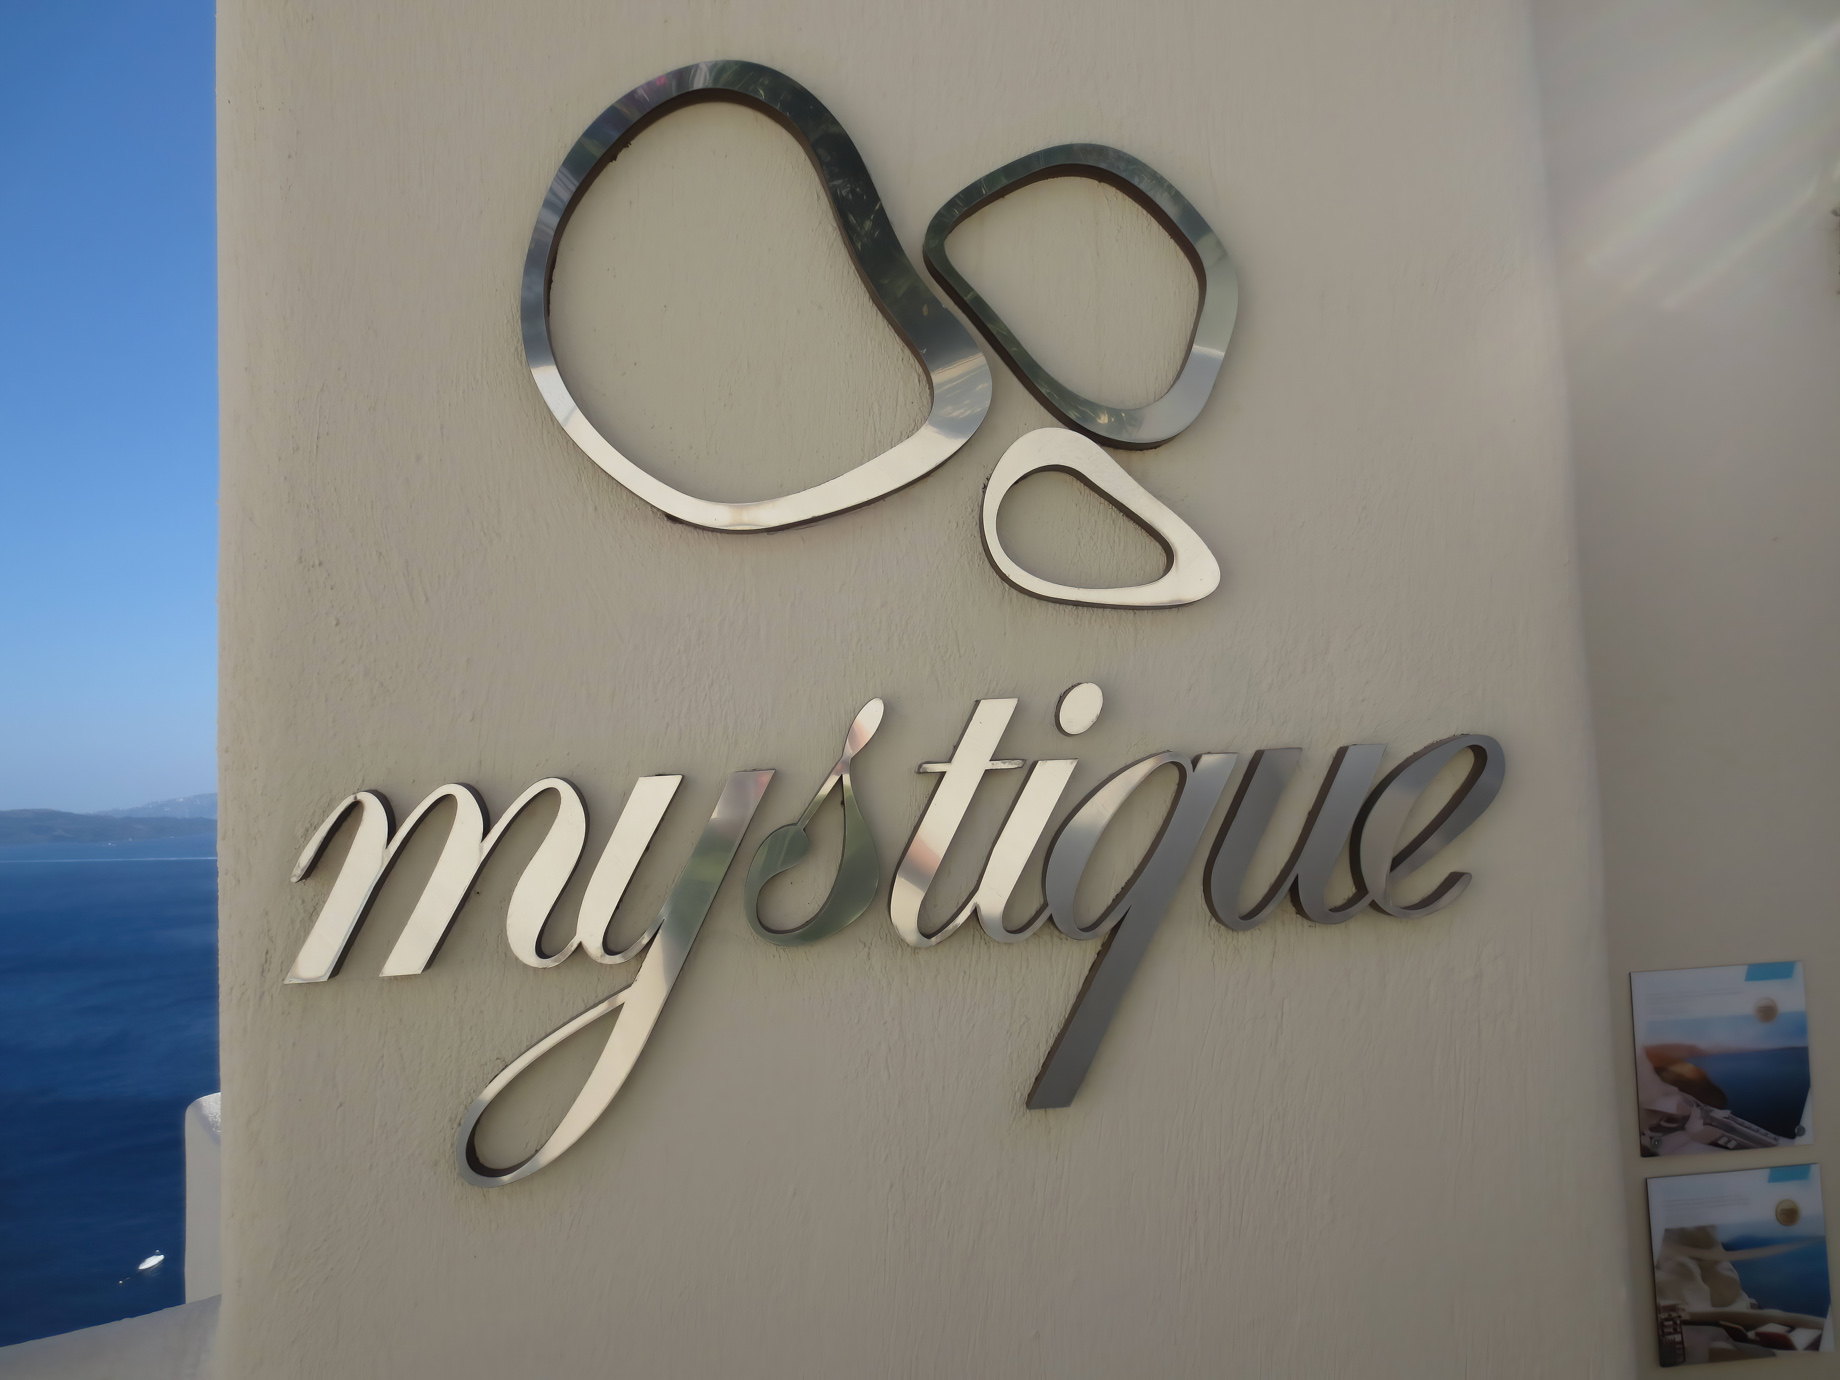 Mystique Hotel Santorini – Oia, Santorini Island, Greece – Mystique Wall Logo